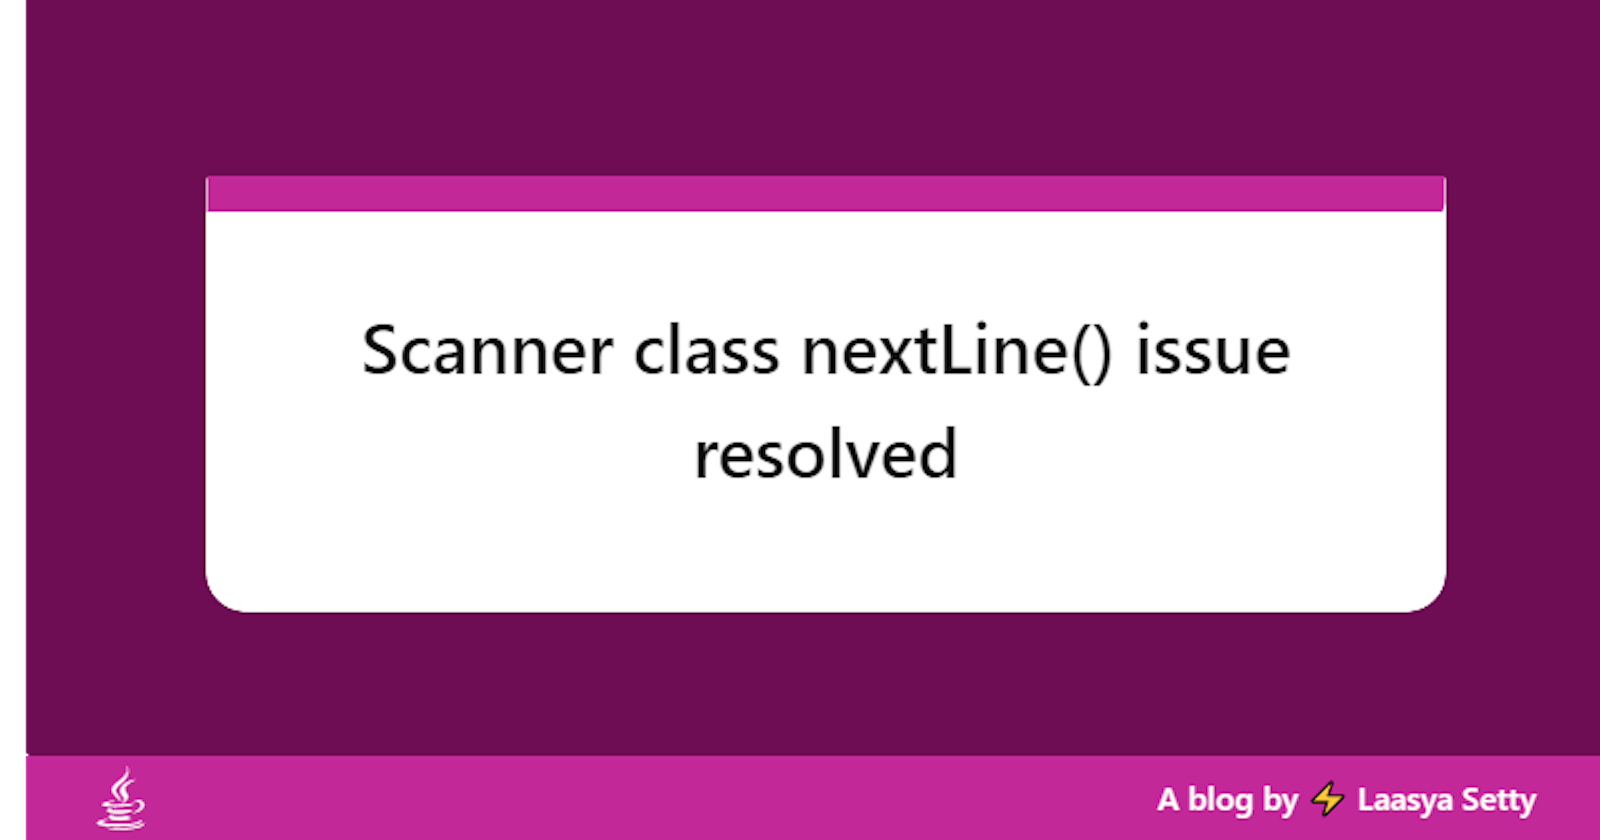 Scanner class nextLine() issue resolved in JAVA